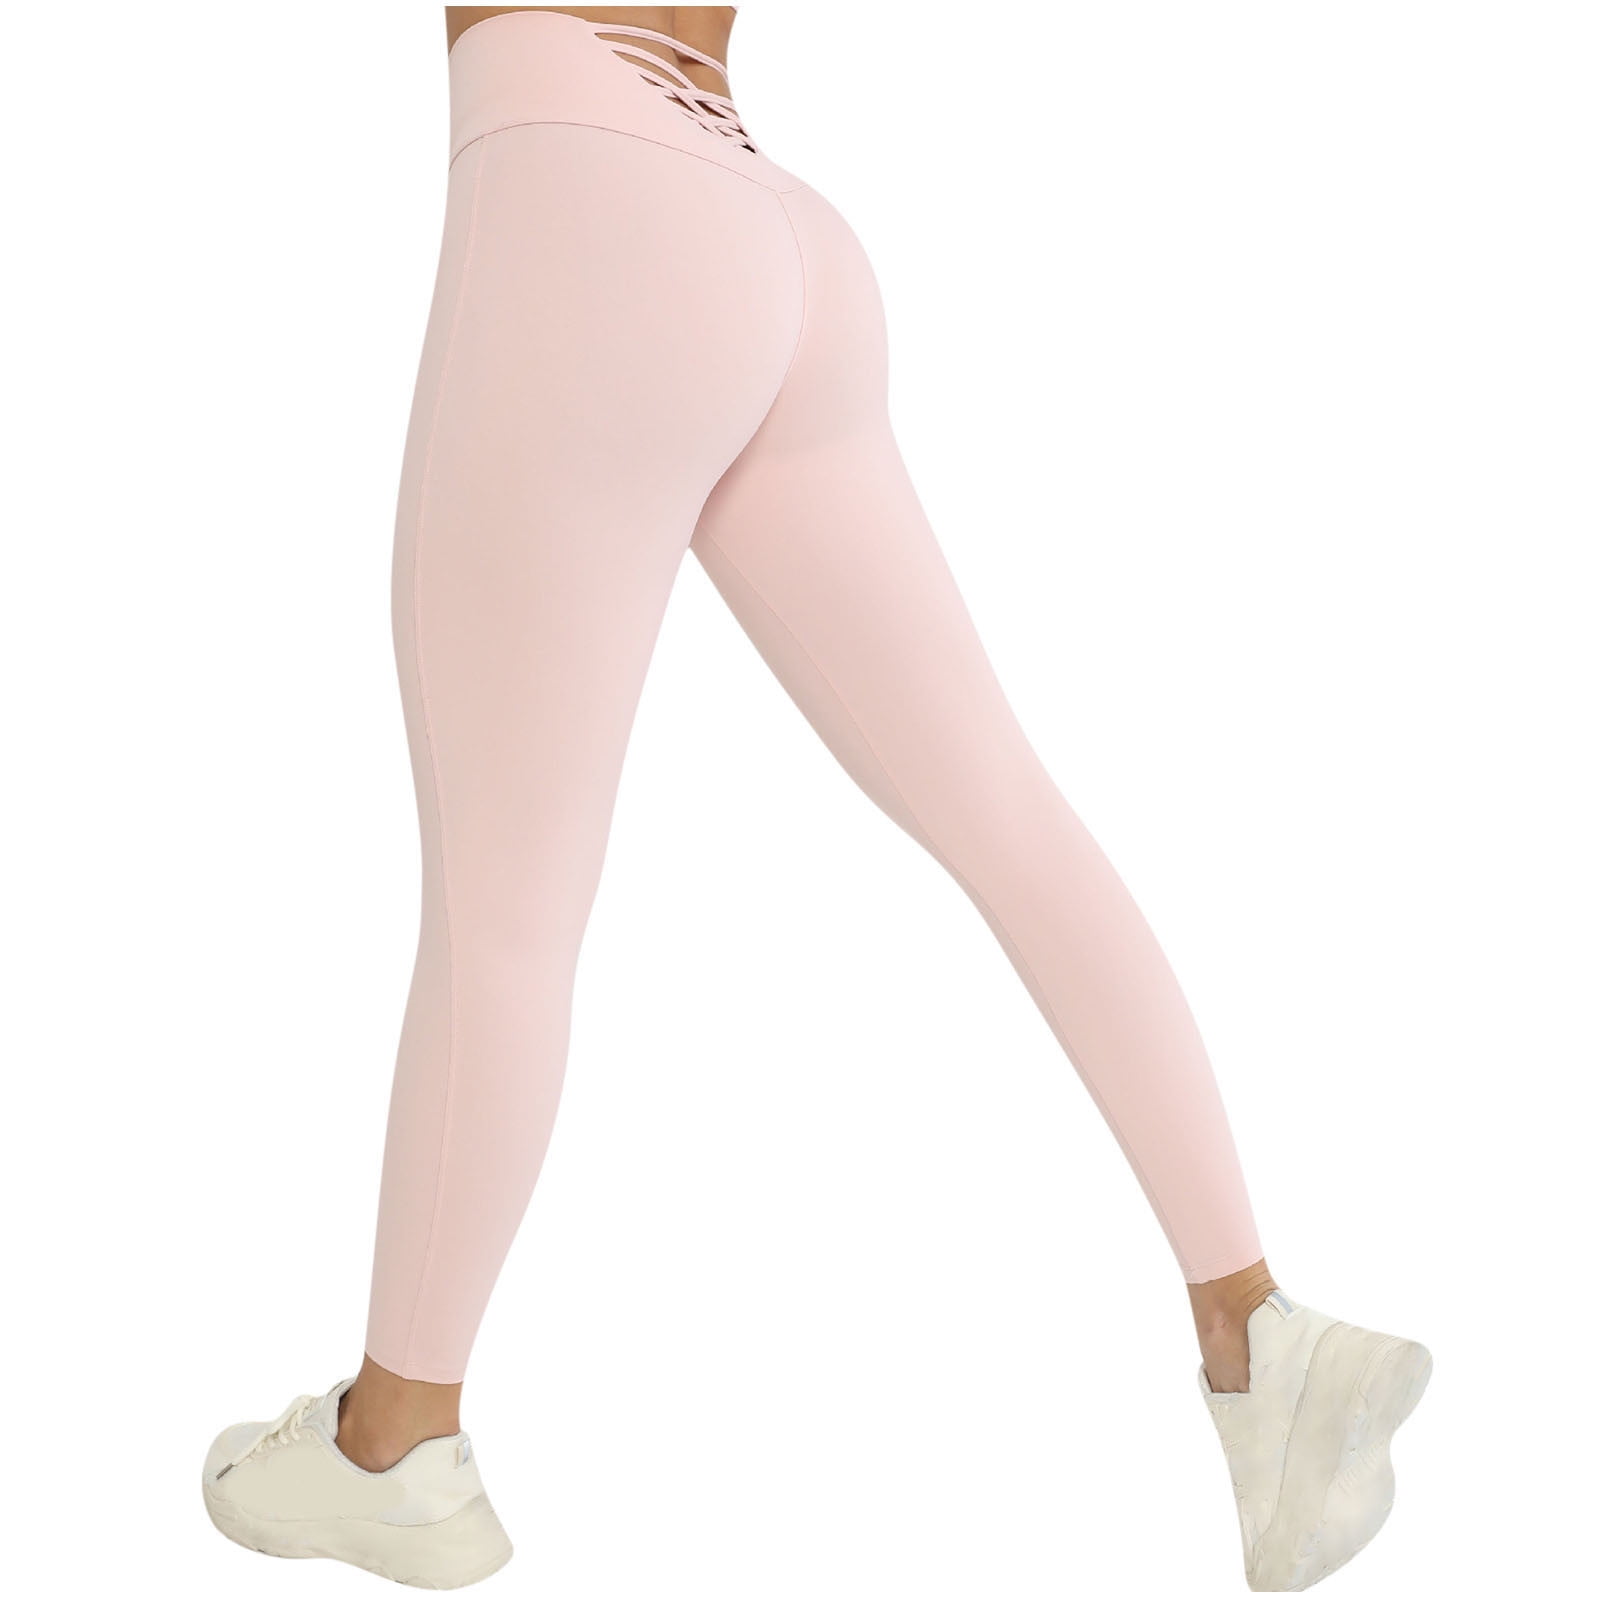 DxhmoneyHX Leggings for Women Non See Through-Workout High Waisted Tummy  Control Tights Yoga Pants